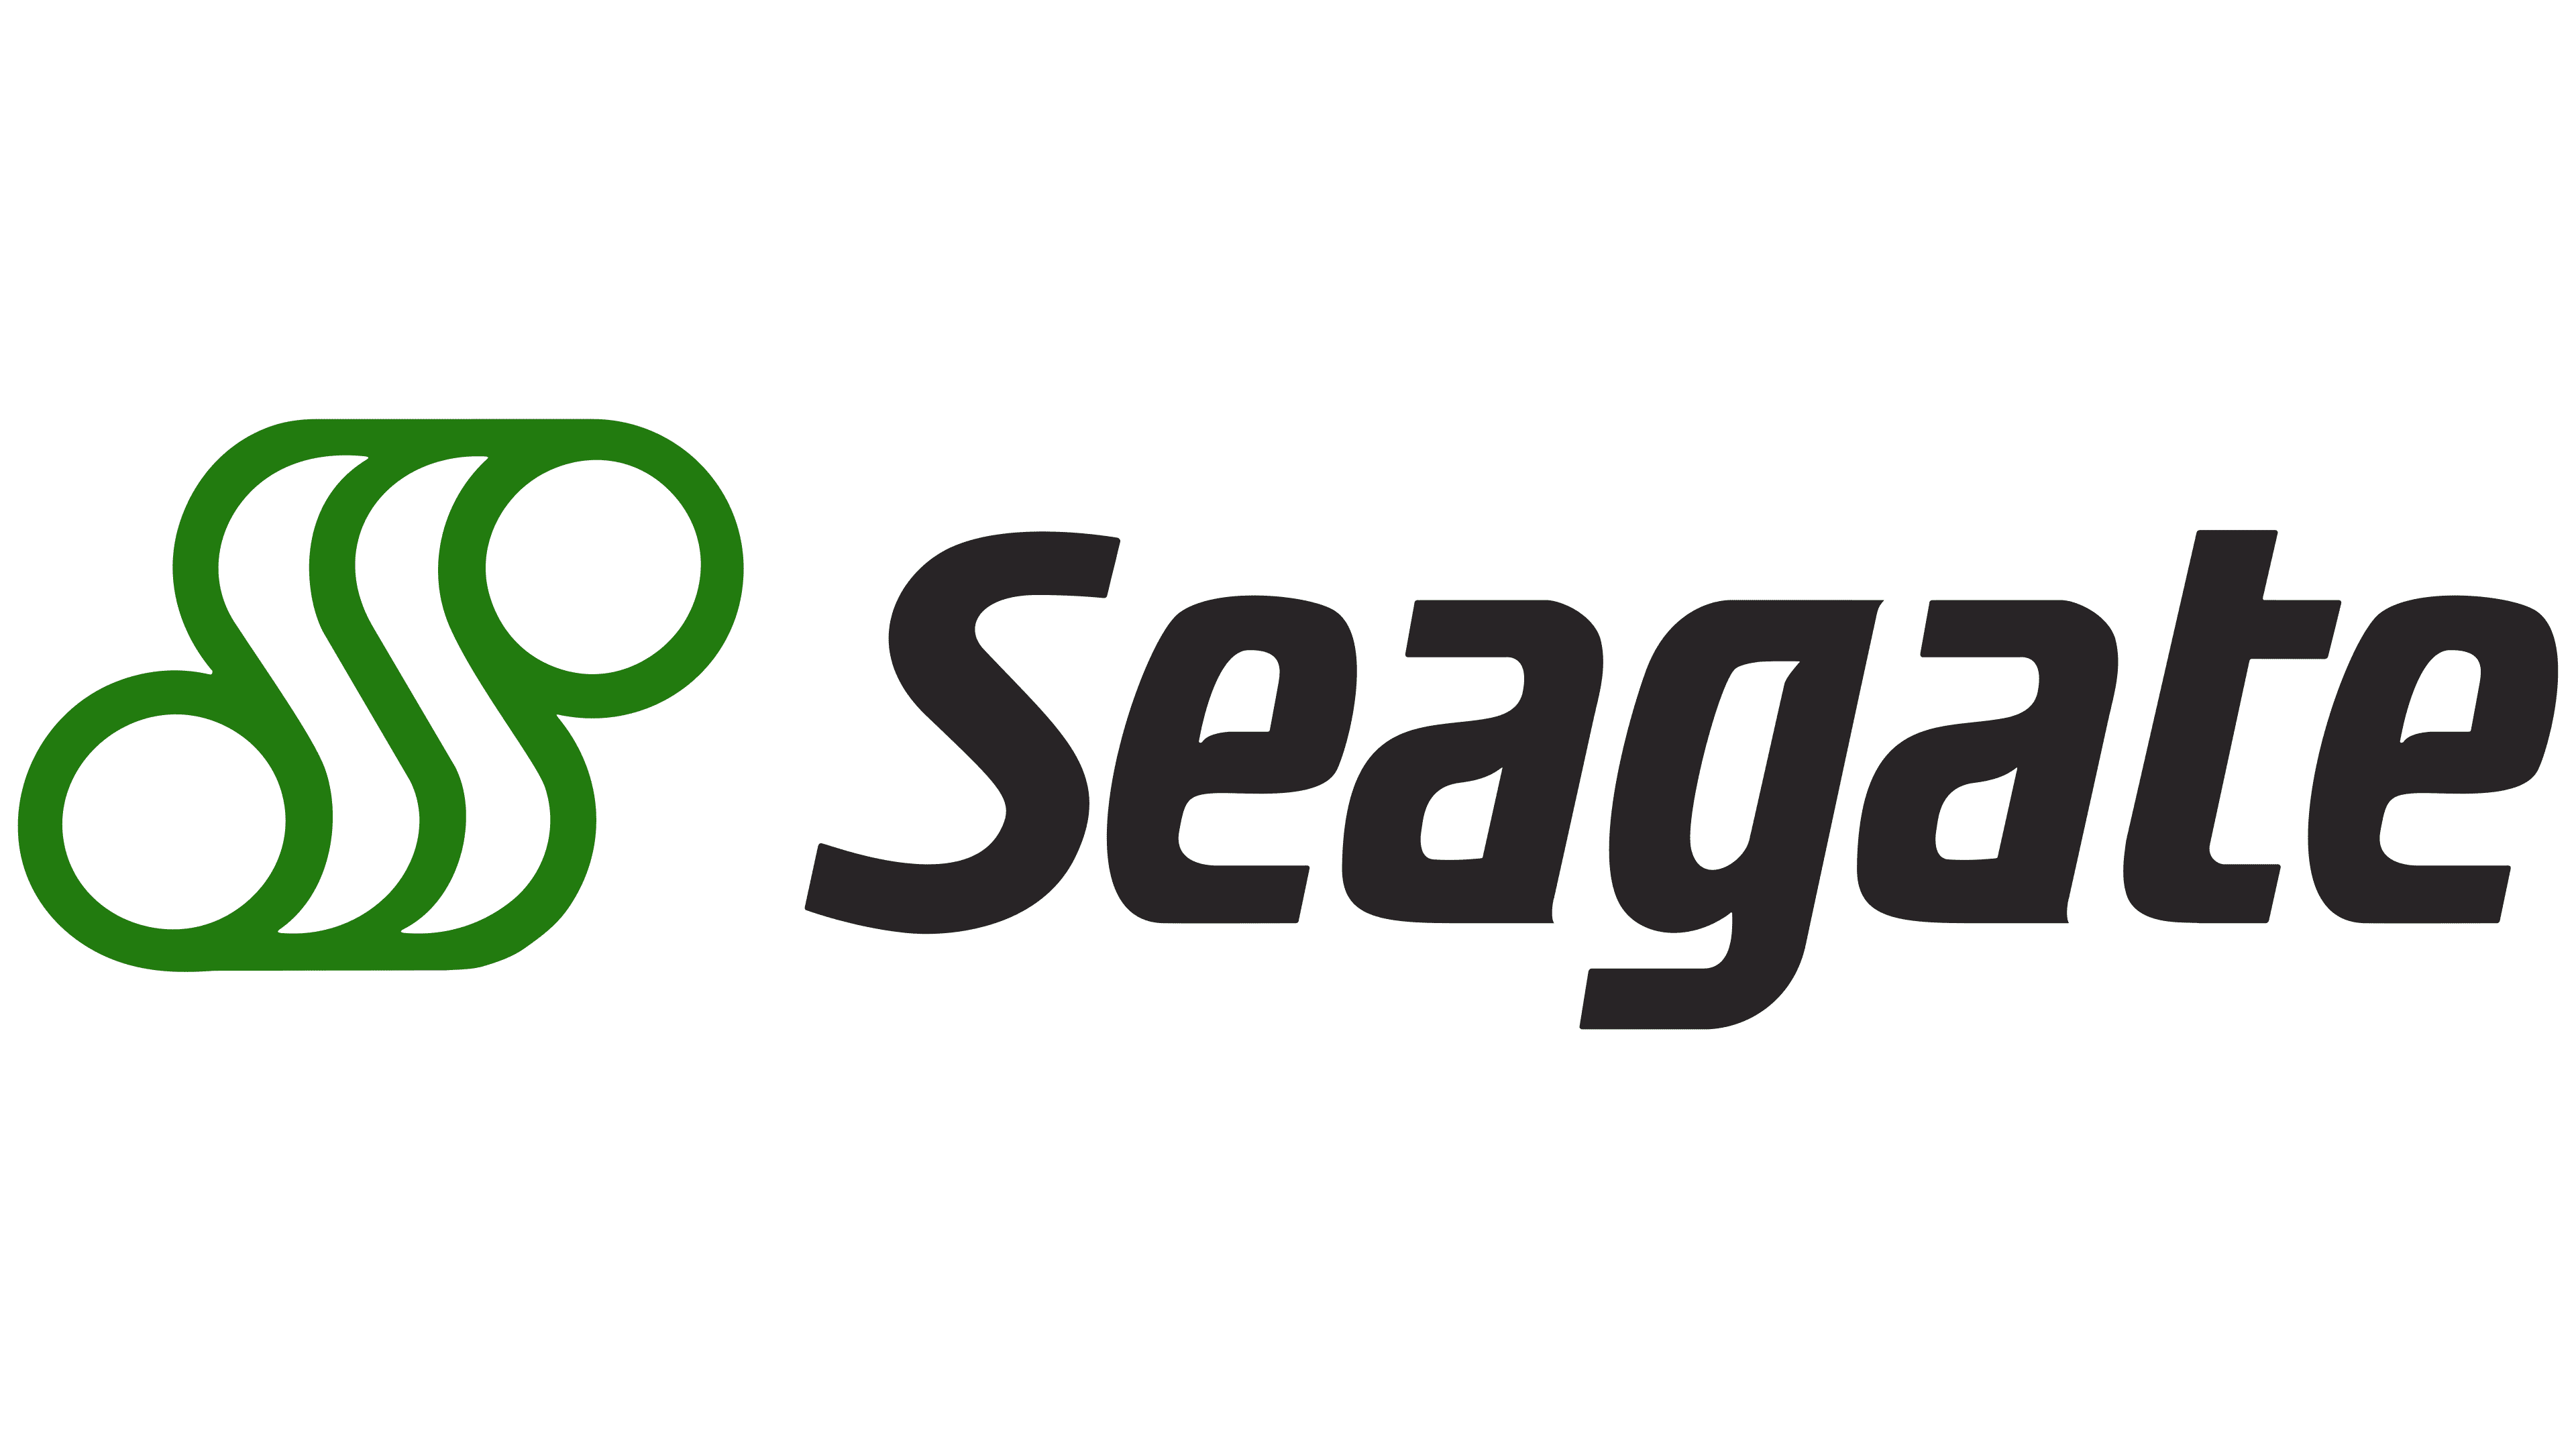 Seagate Technology Brand Color Codes » BrandColorCode.com